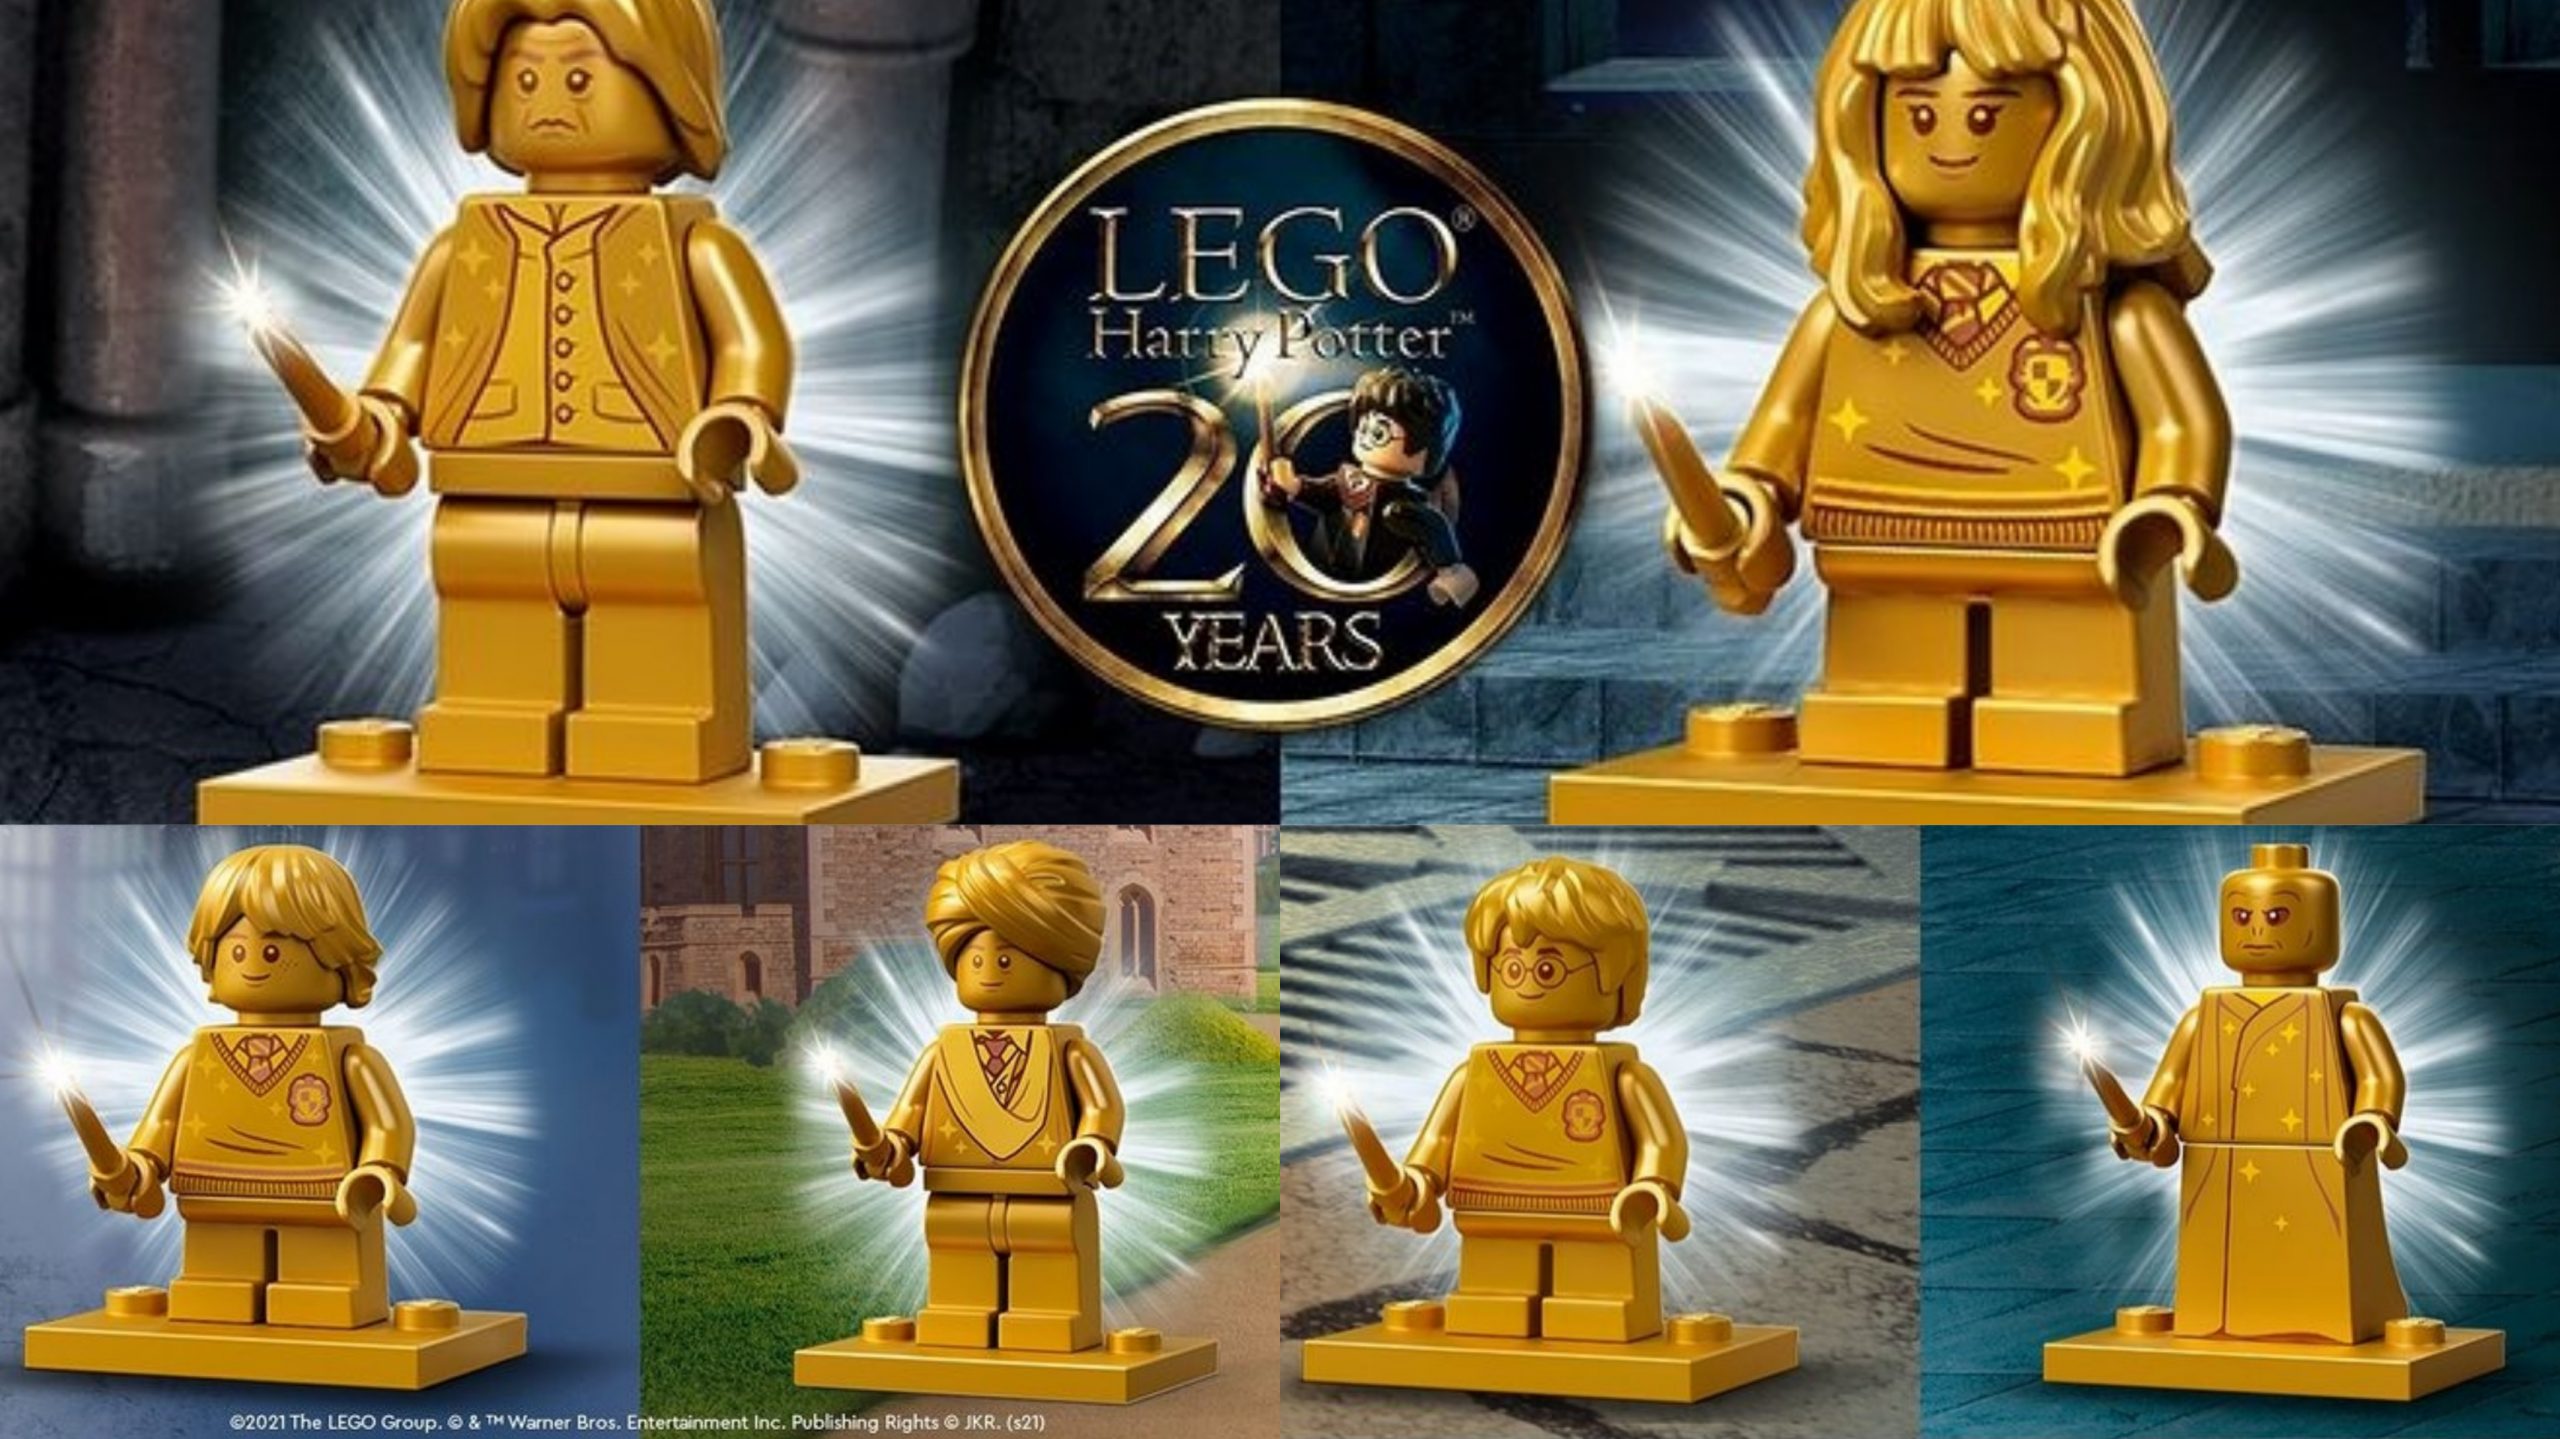 Brickfinder - Lego Harry Potter 20th Anniversary Golden Minifigures 558